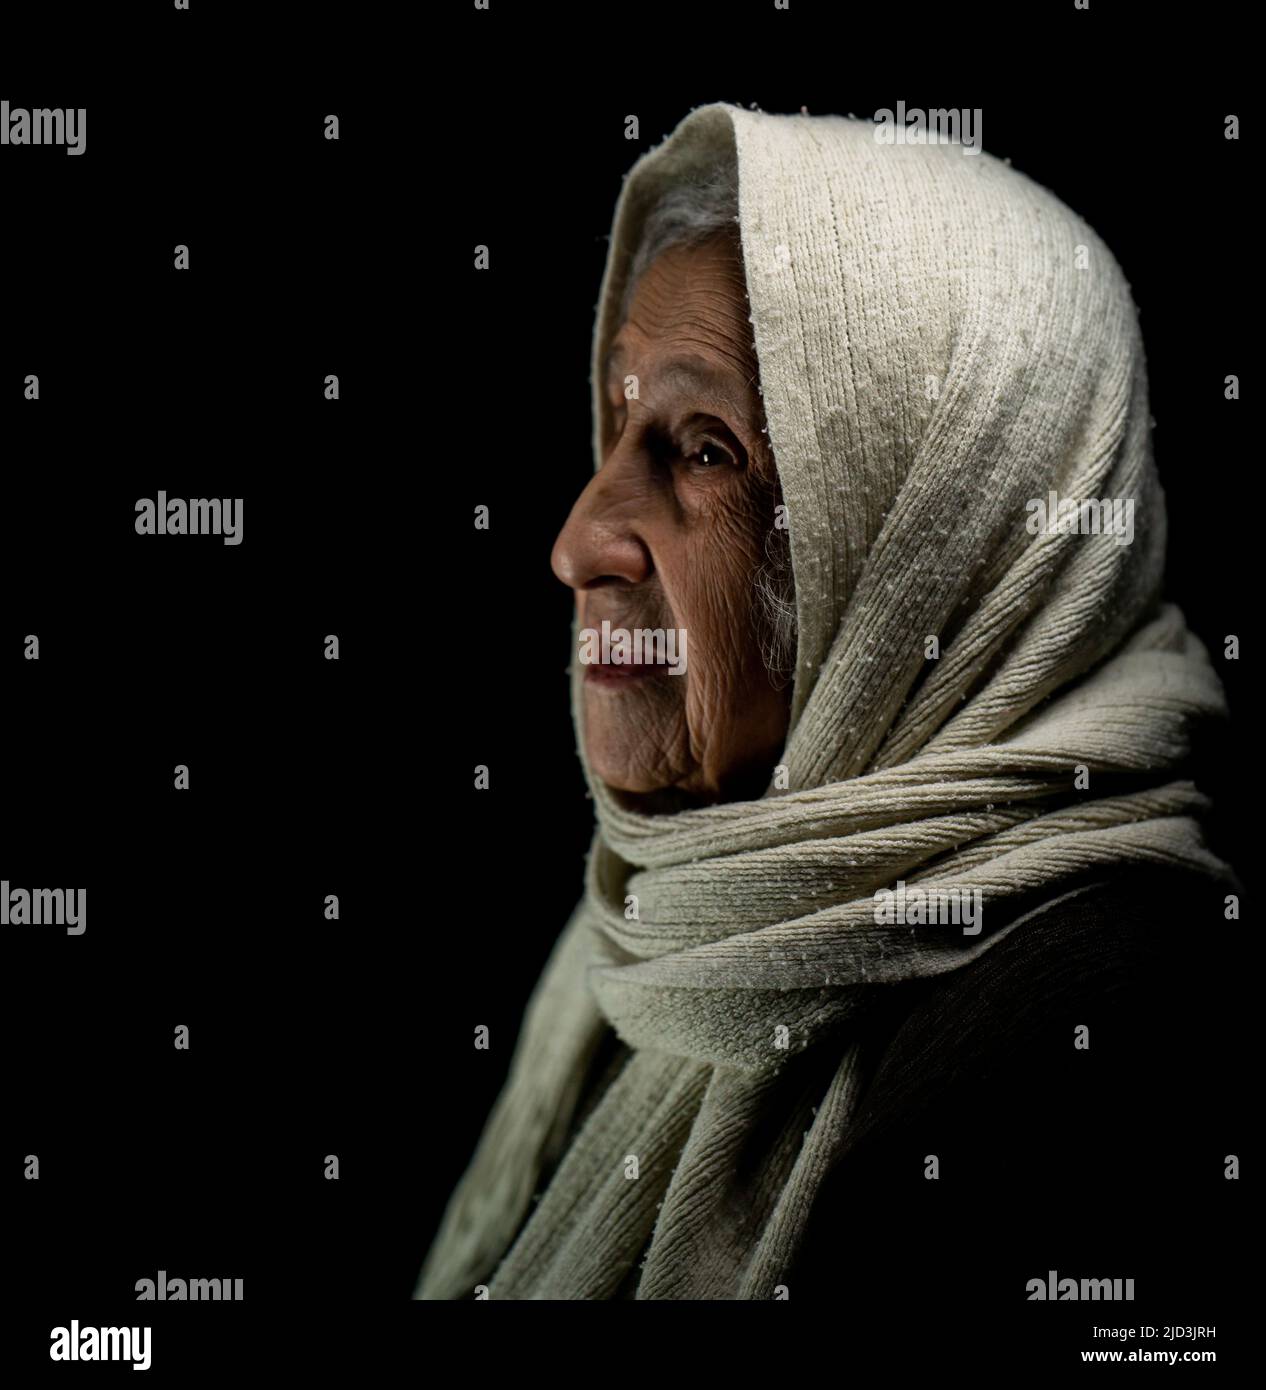 Elderly woman with kerchief, studio portrait. High quality photo Stock Photo